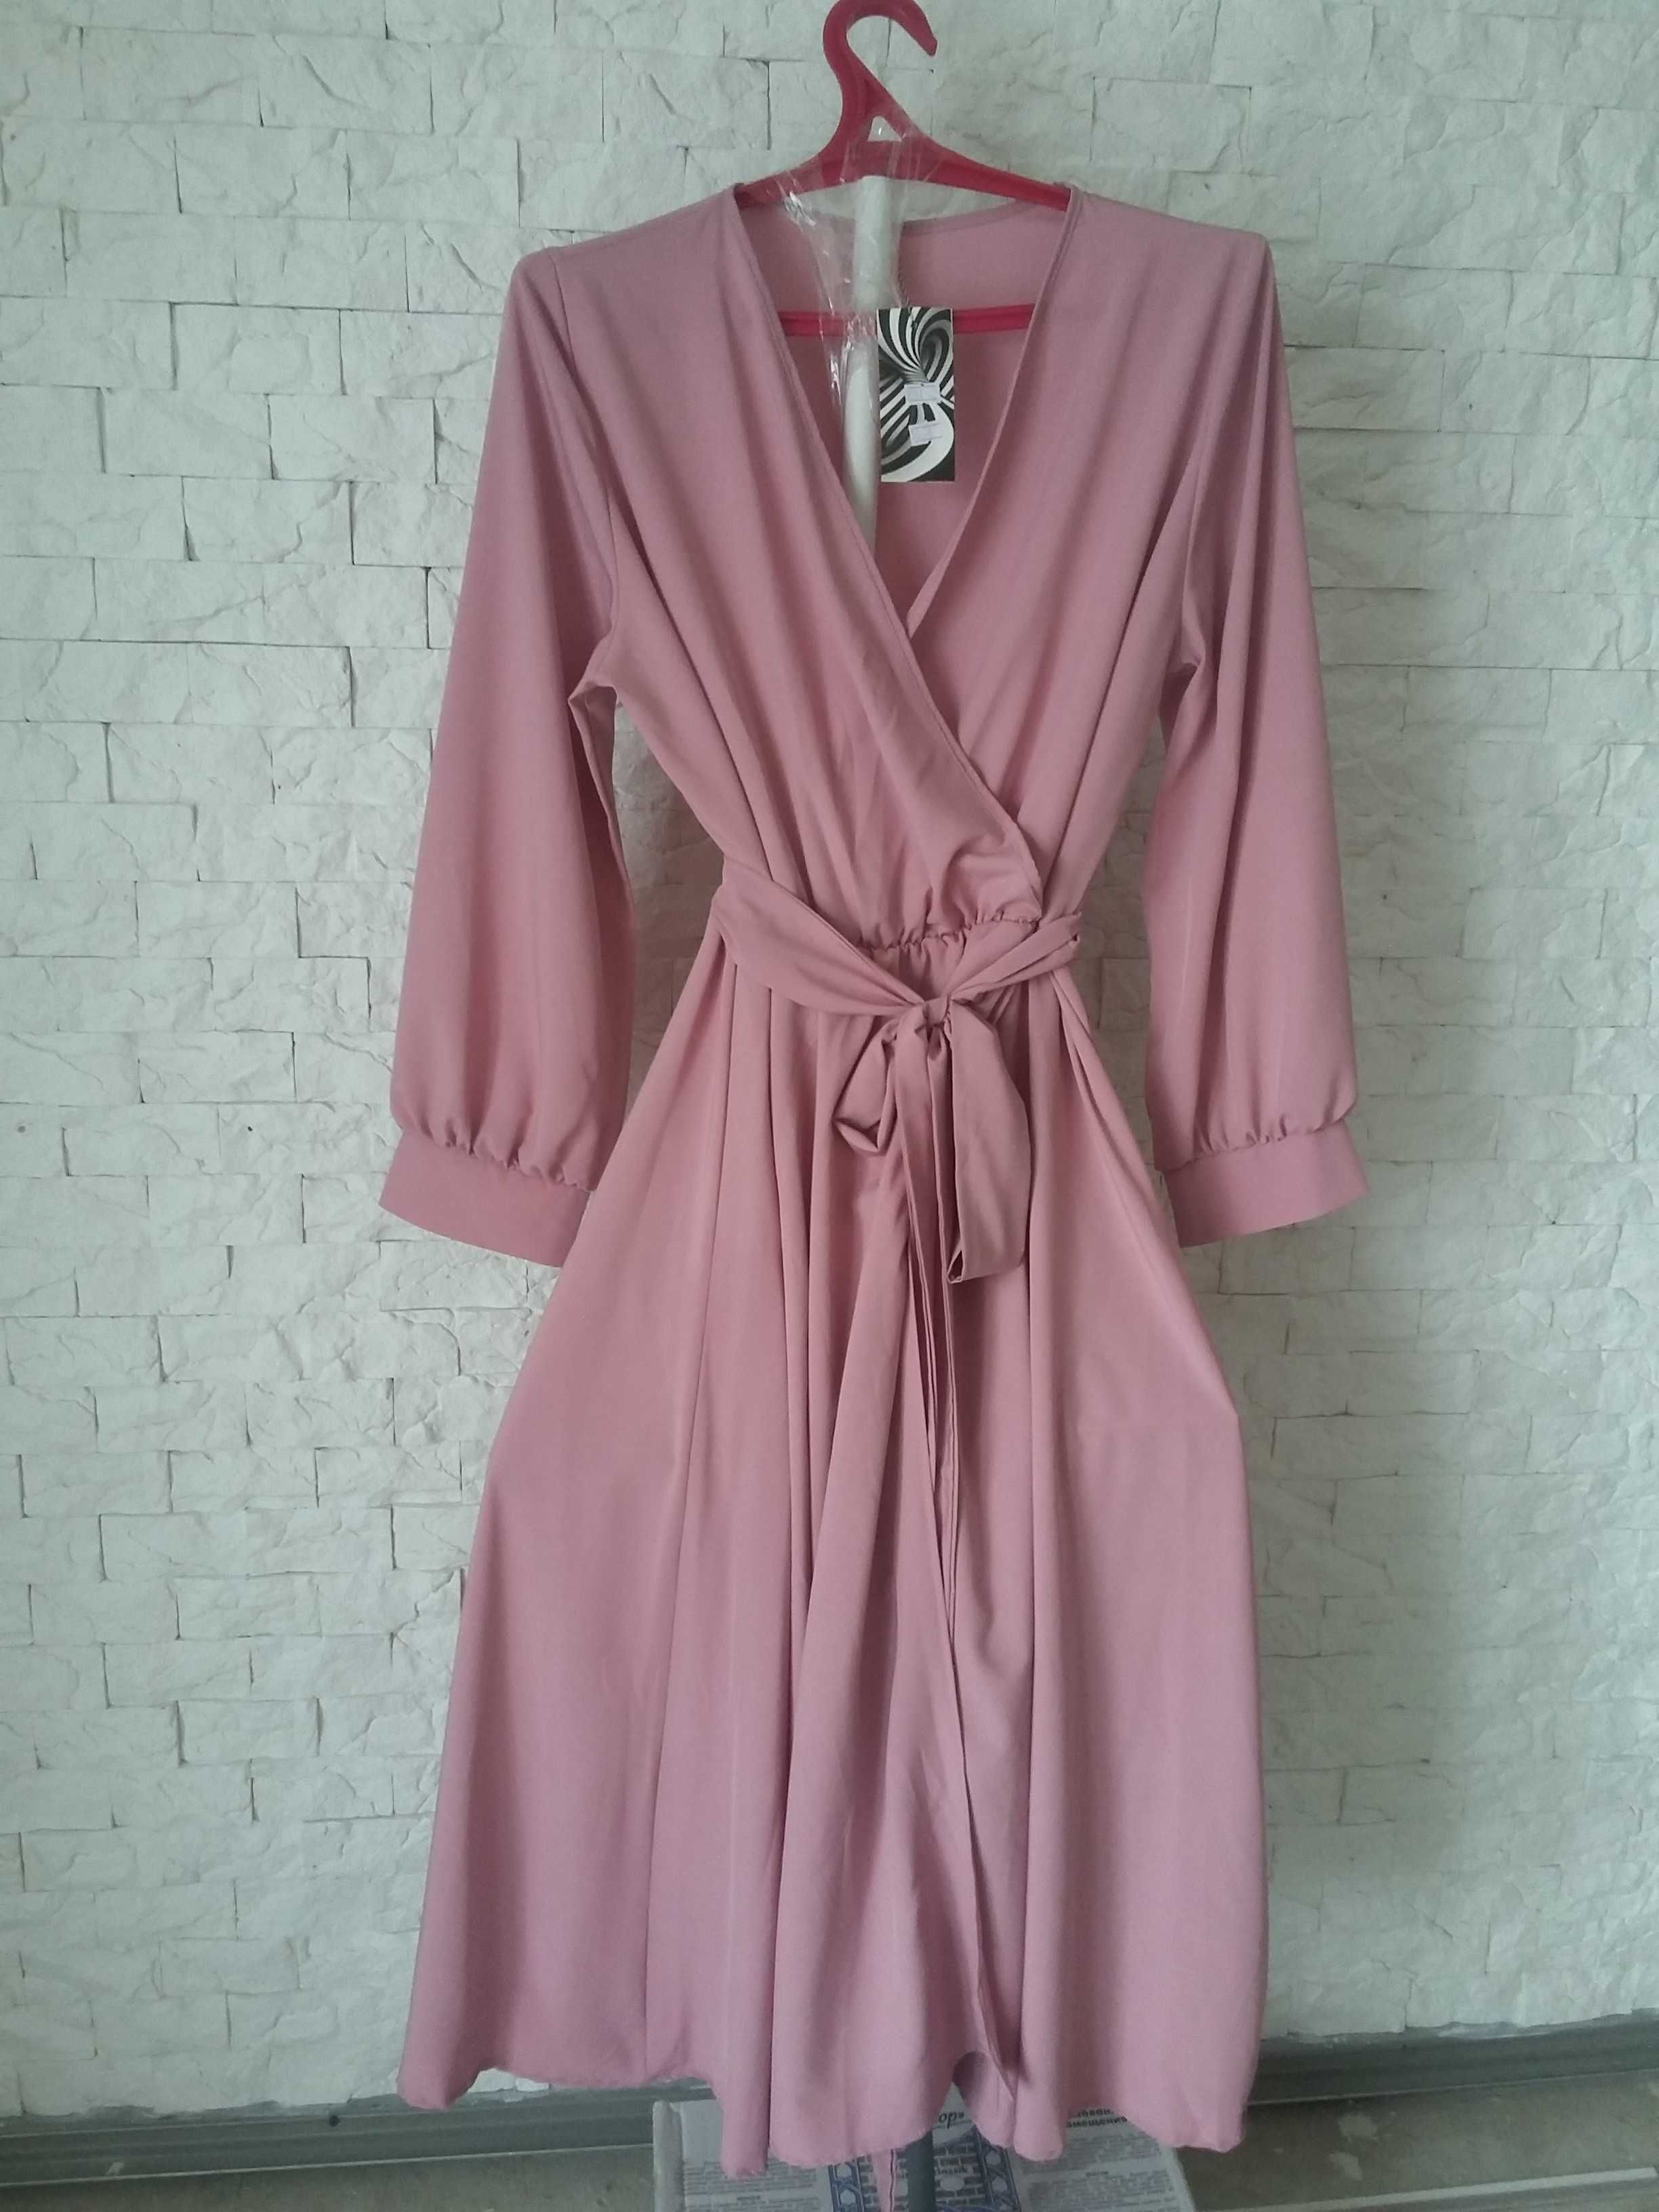 Святкове нове плаття рожевого кольору